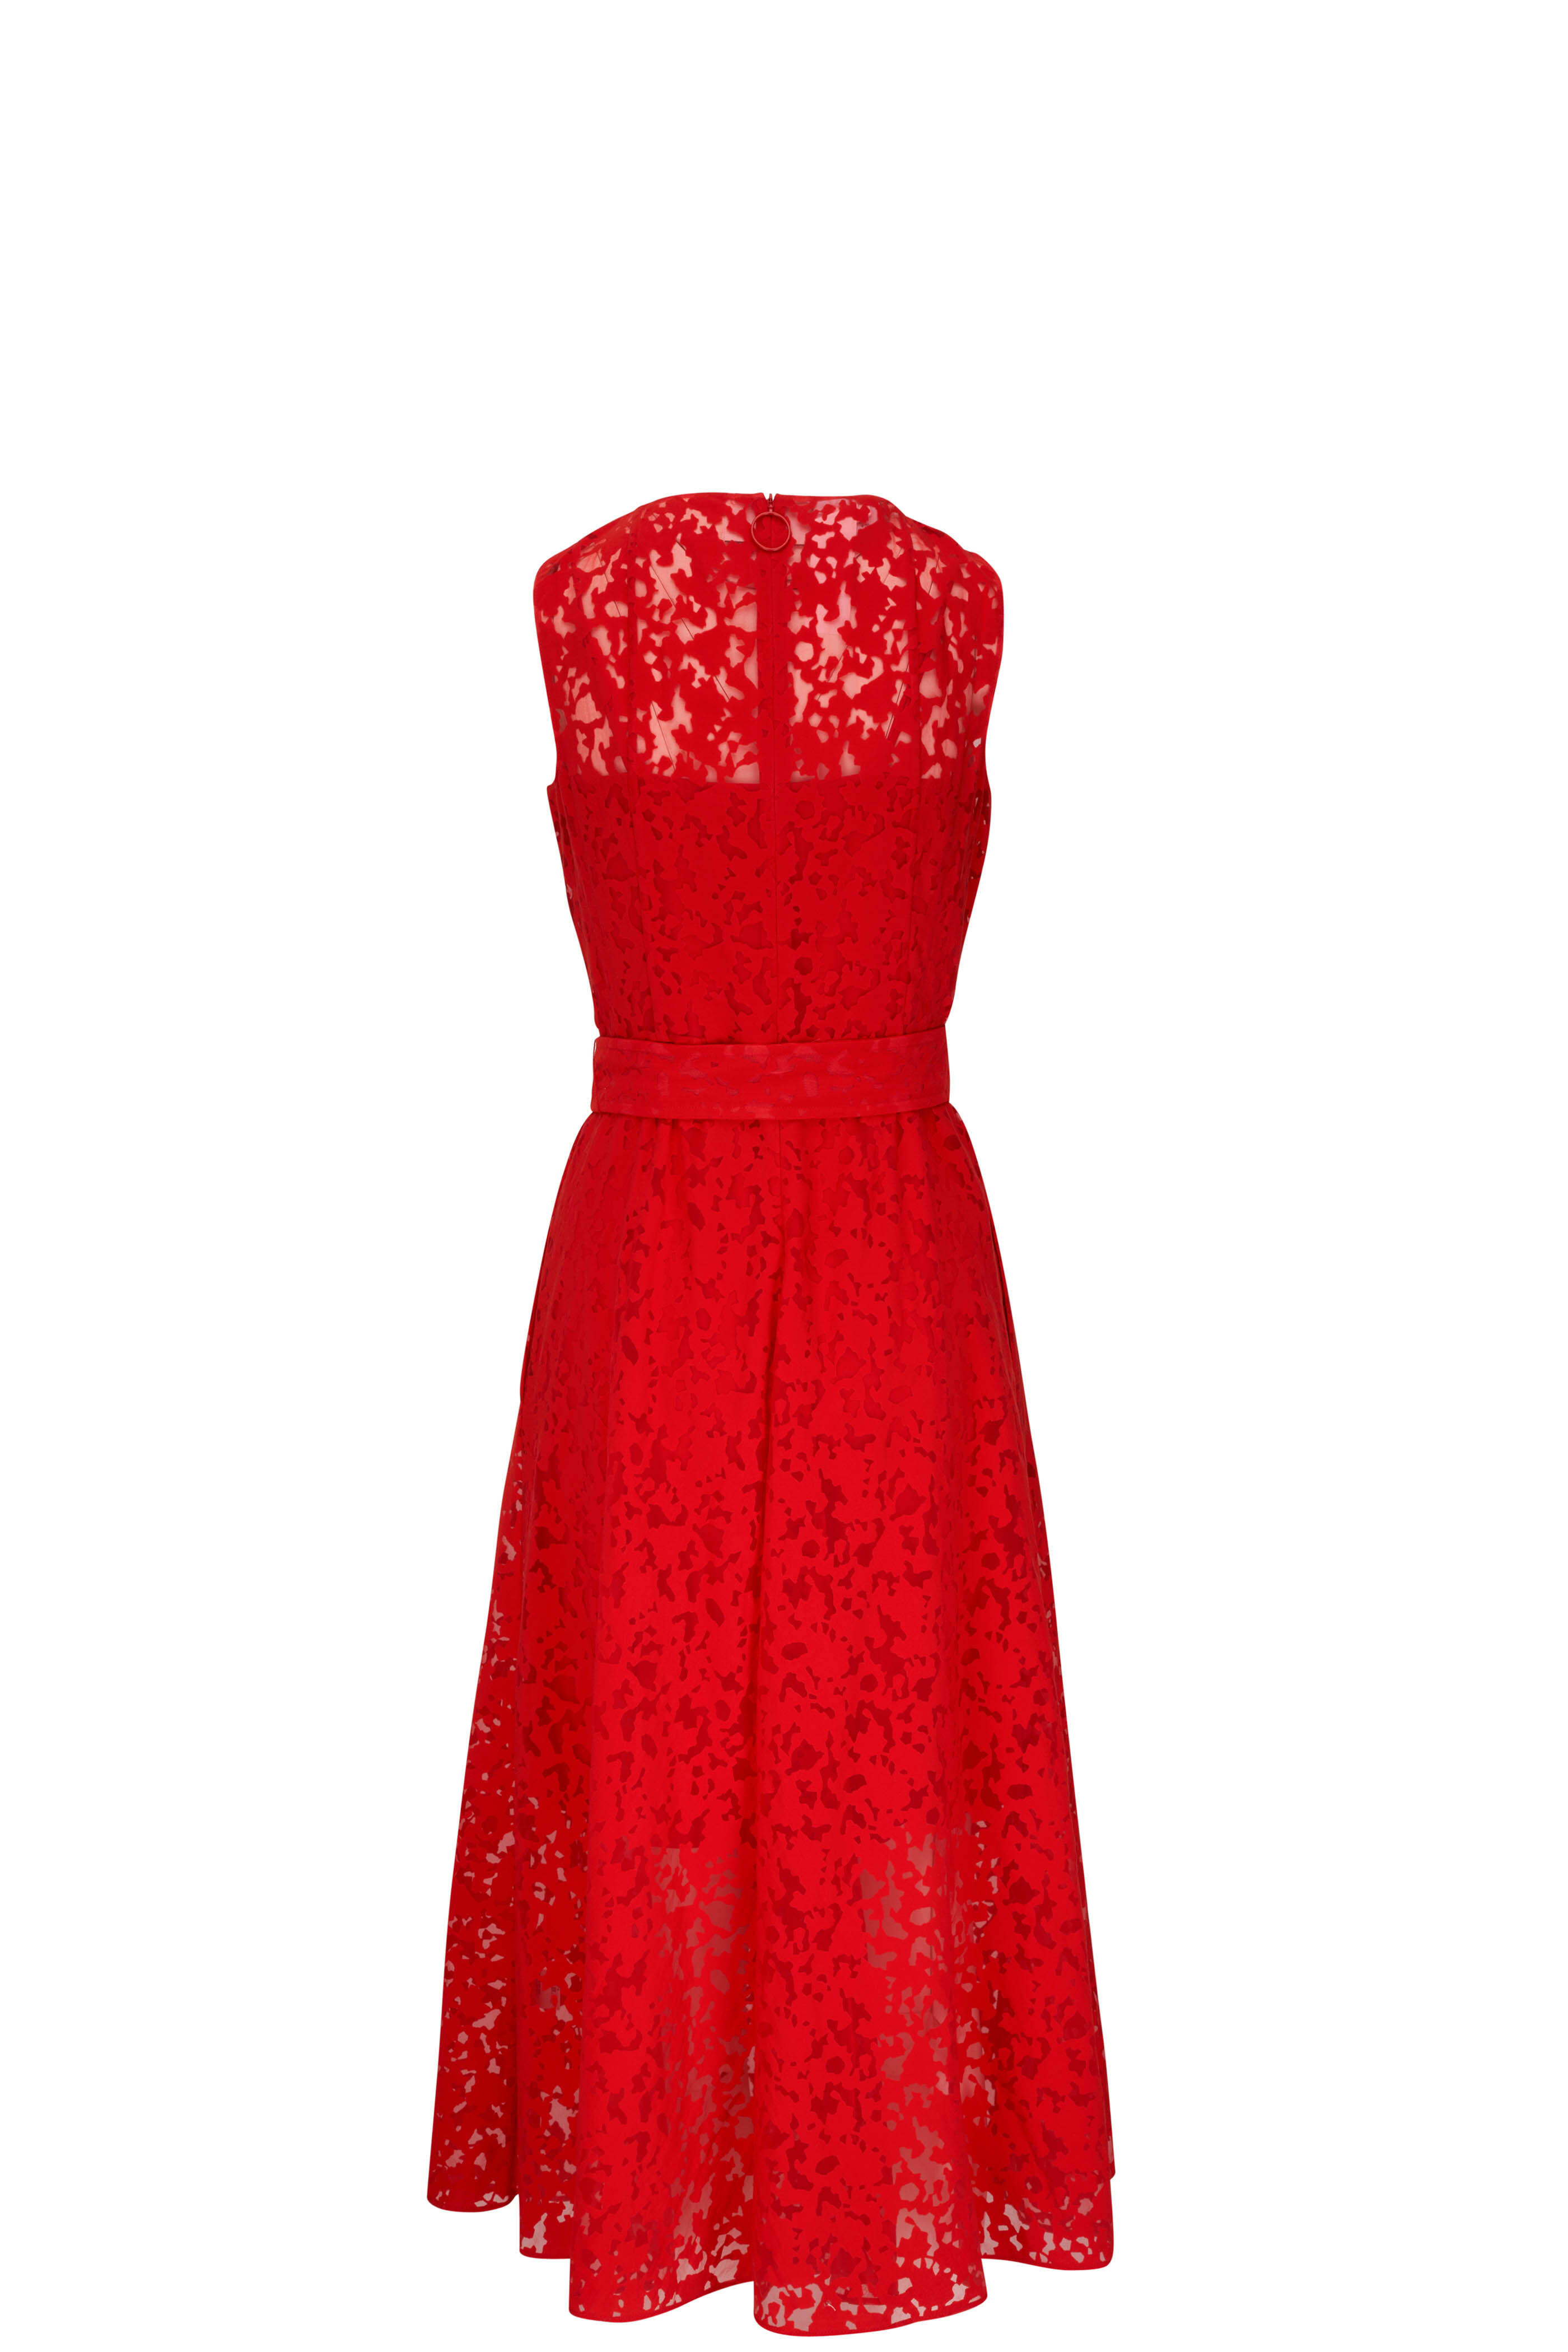 Akris Punto Crew Neck Midi Length Dress - Red Dresses, Clothing - WAK125032